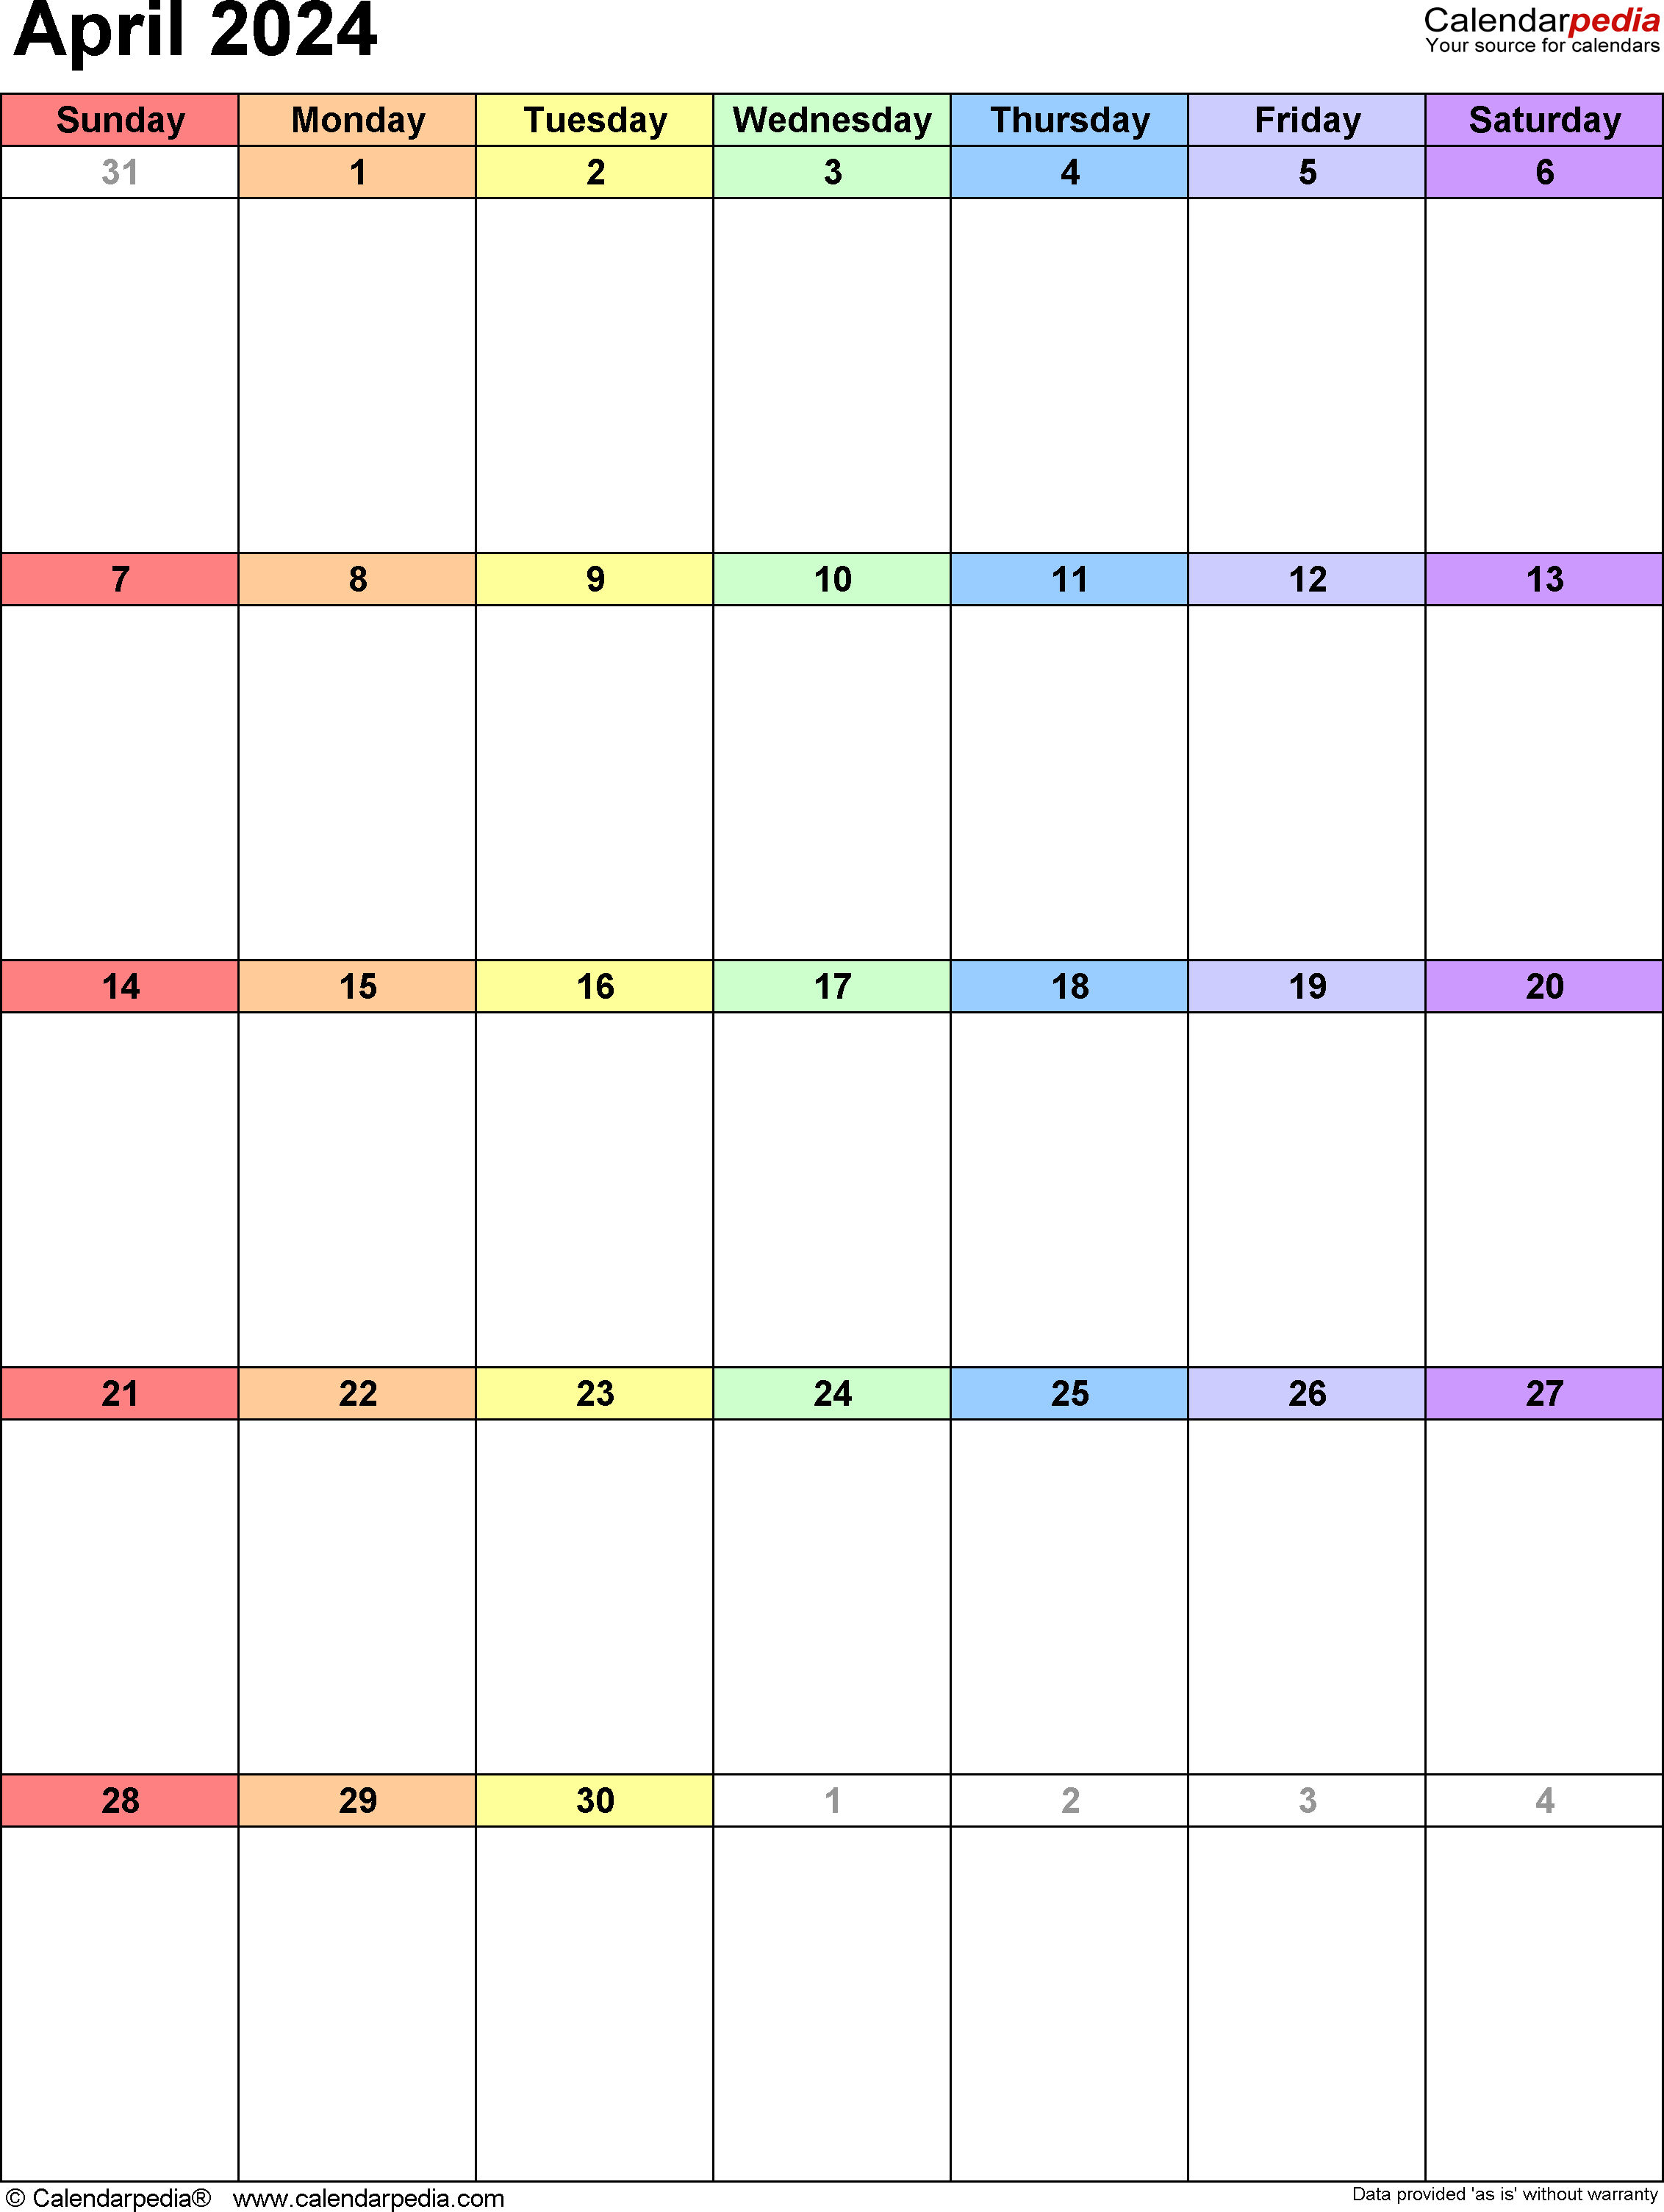 April 2024 Calendar | Templates For Word, Excel And Pdf in Editable Calendar April 2024